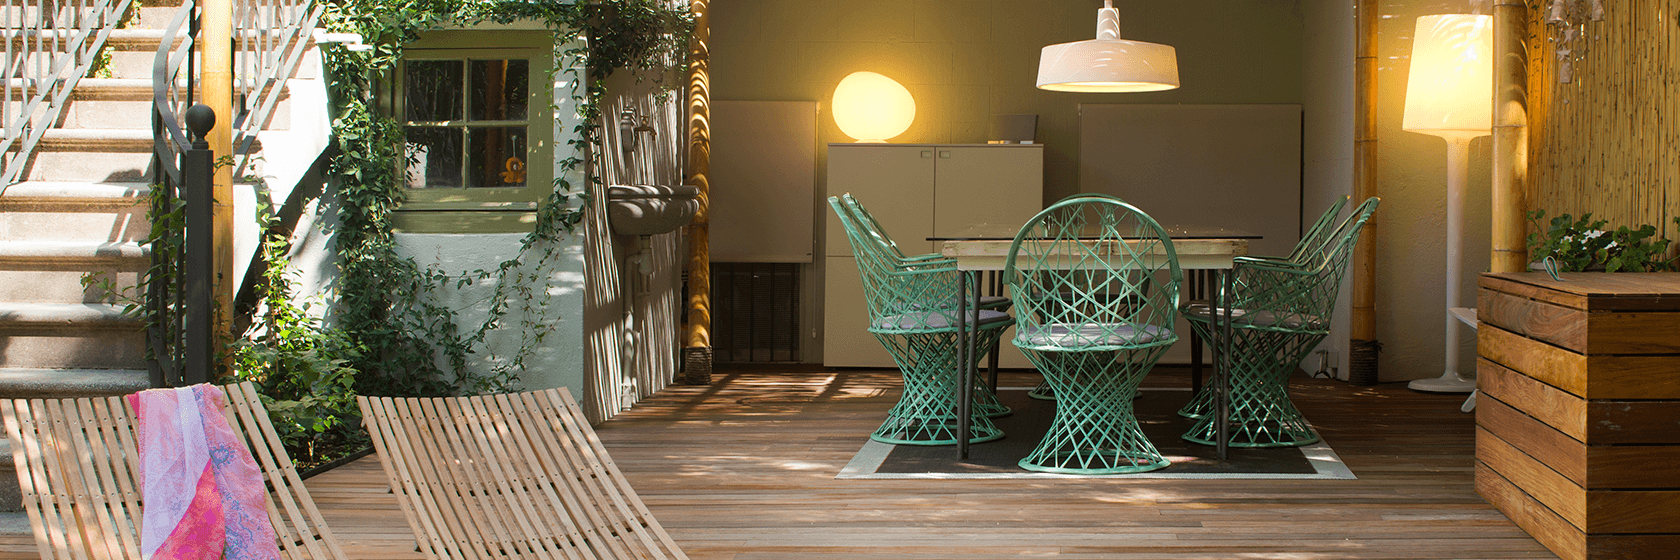 design your own outdoor dining area garden design for living for outdoor dining area design Wonderful